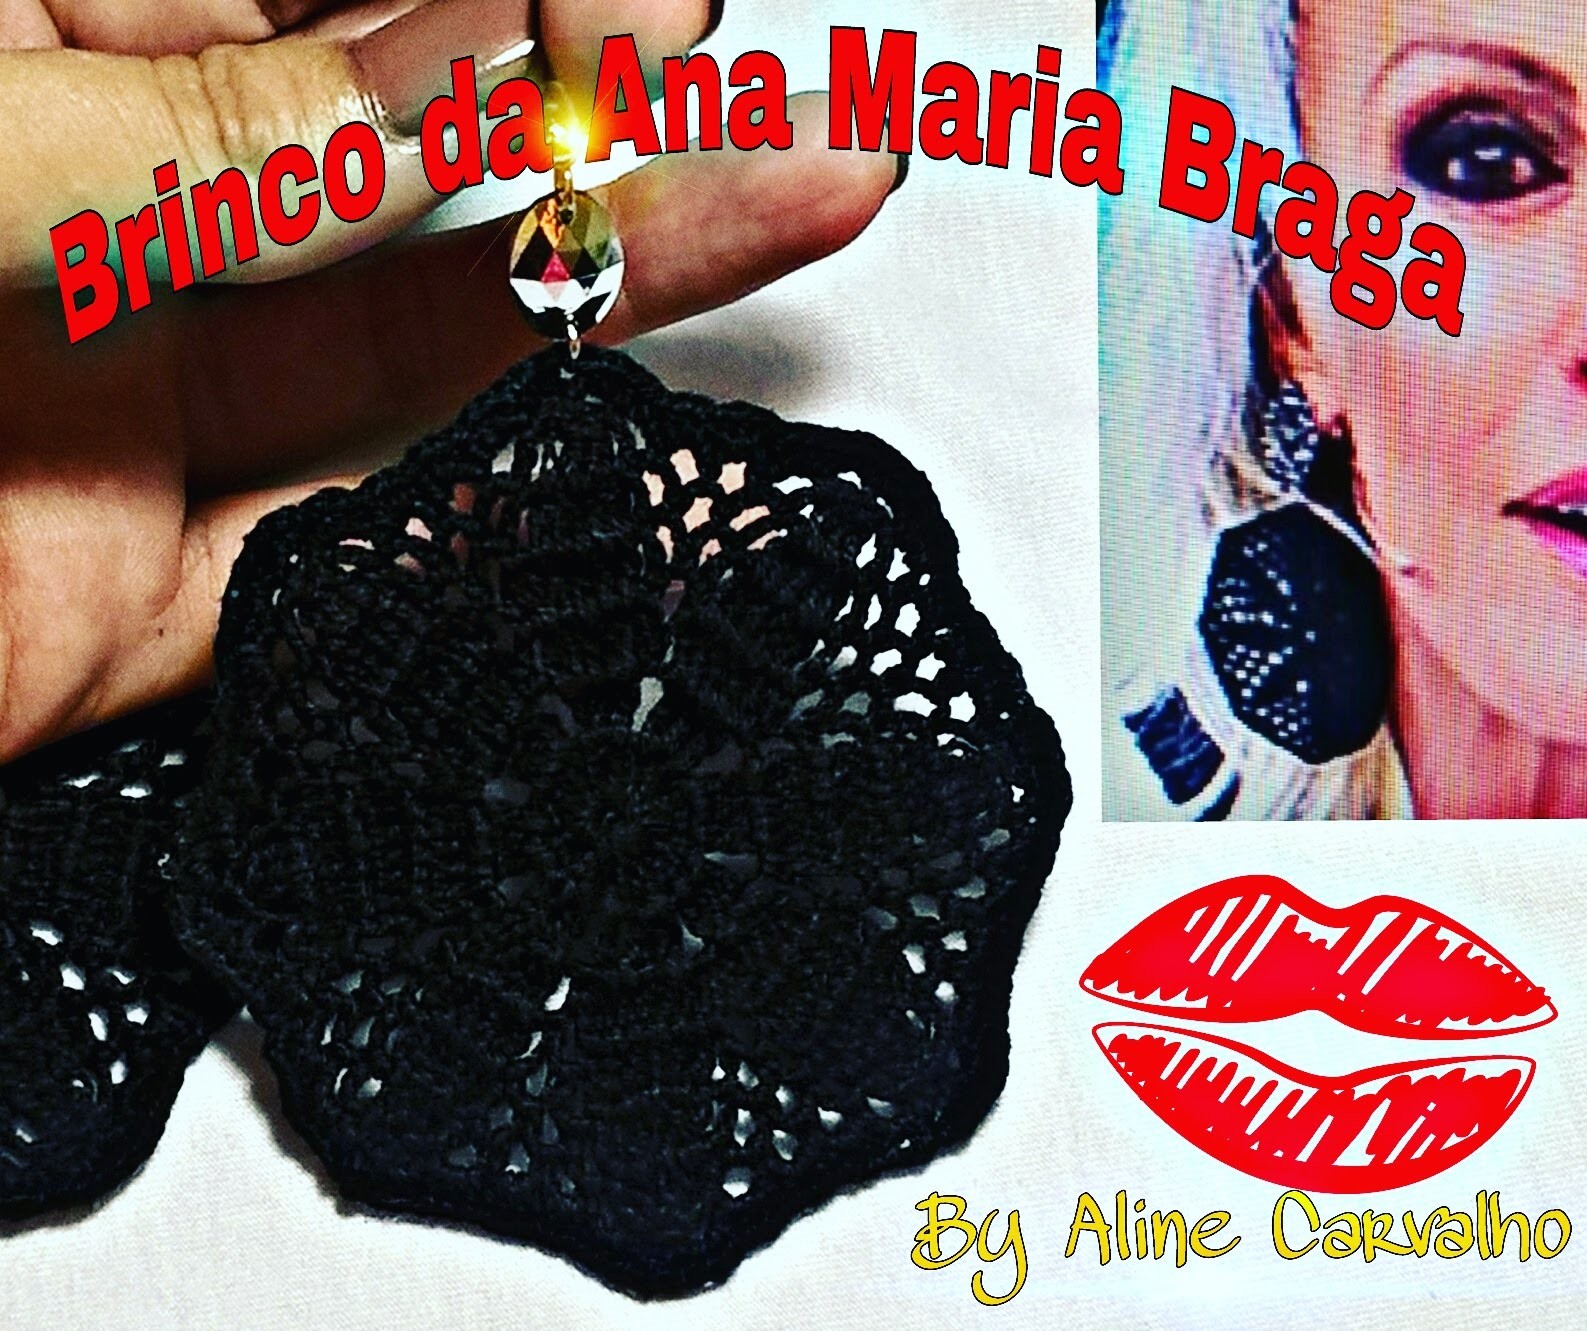 Brinco da Ana Maria Braga de crochê